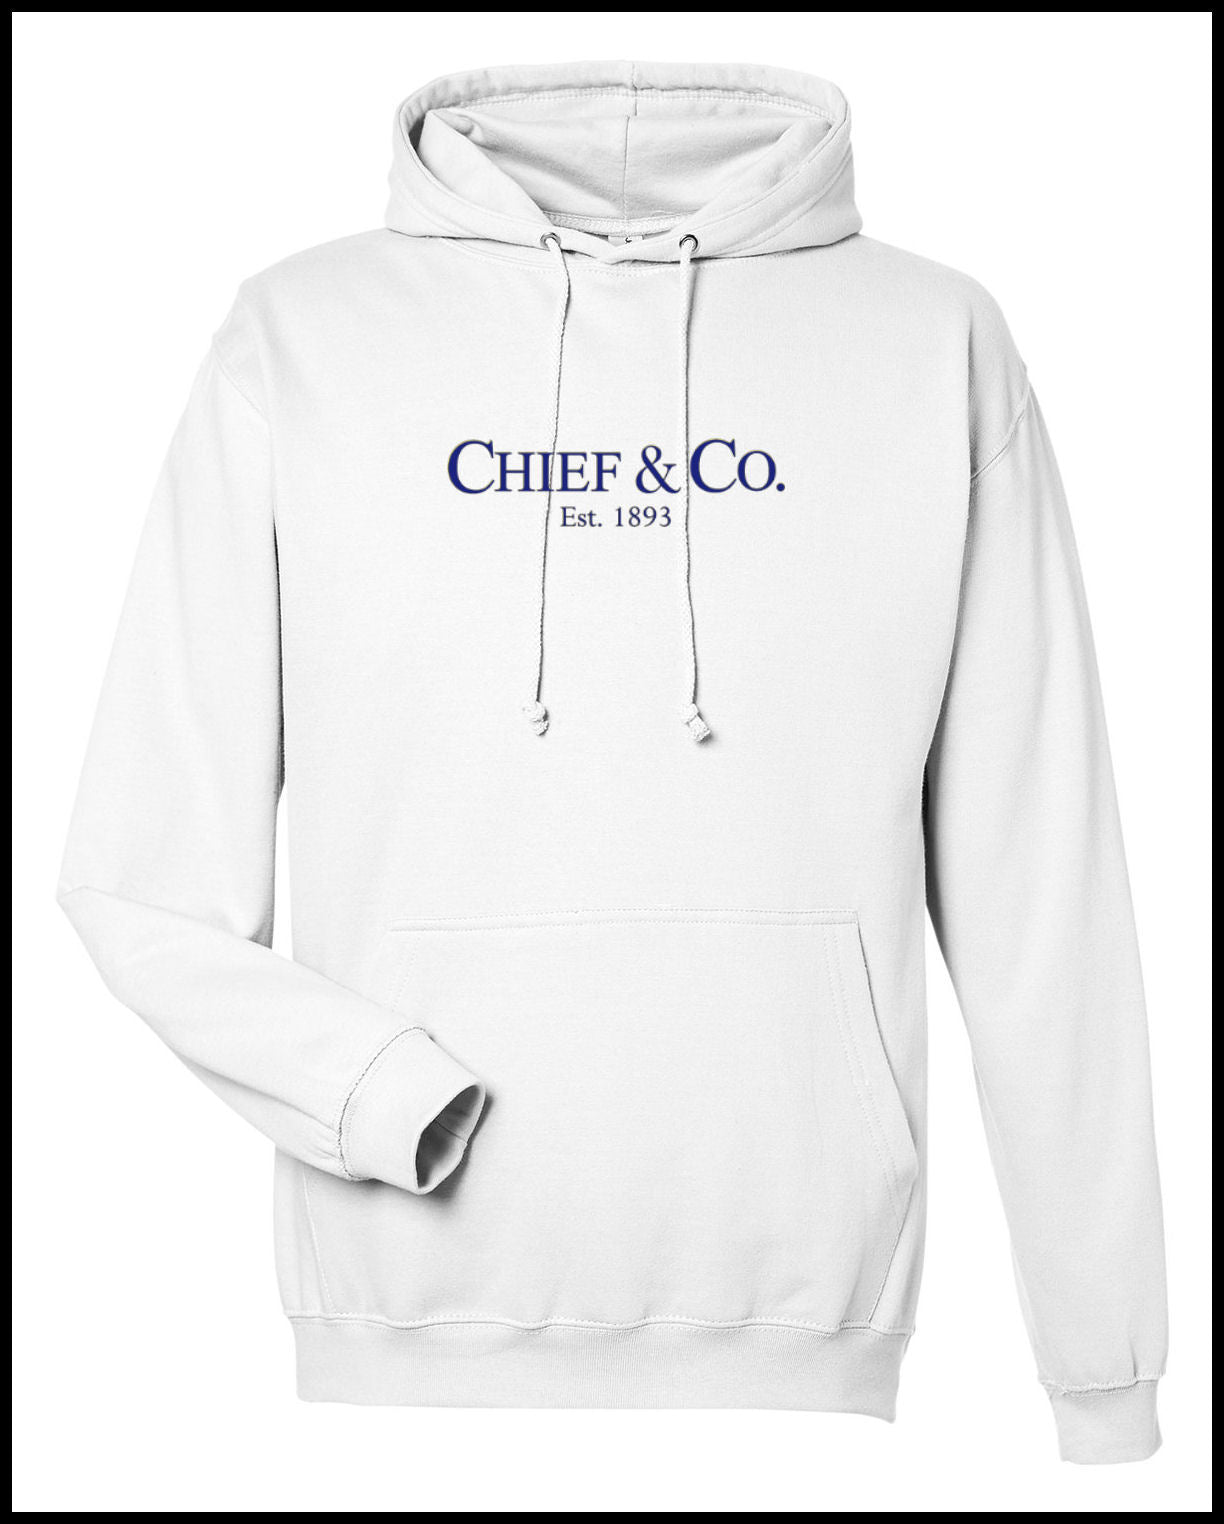 Chief & Co. White & Navy Hooded Sweatshirt